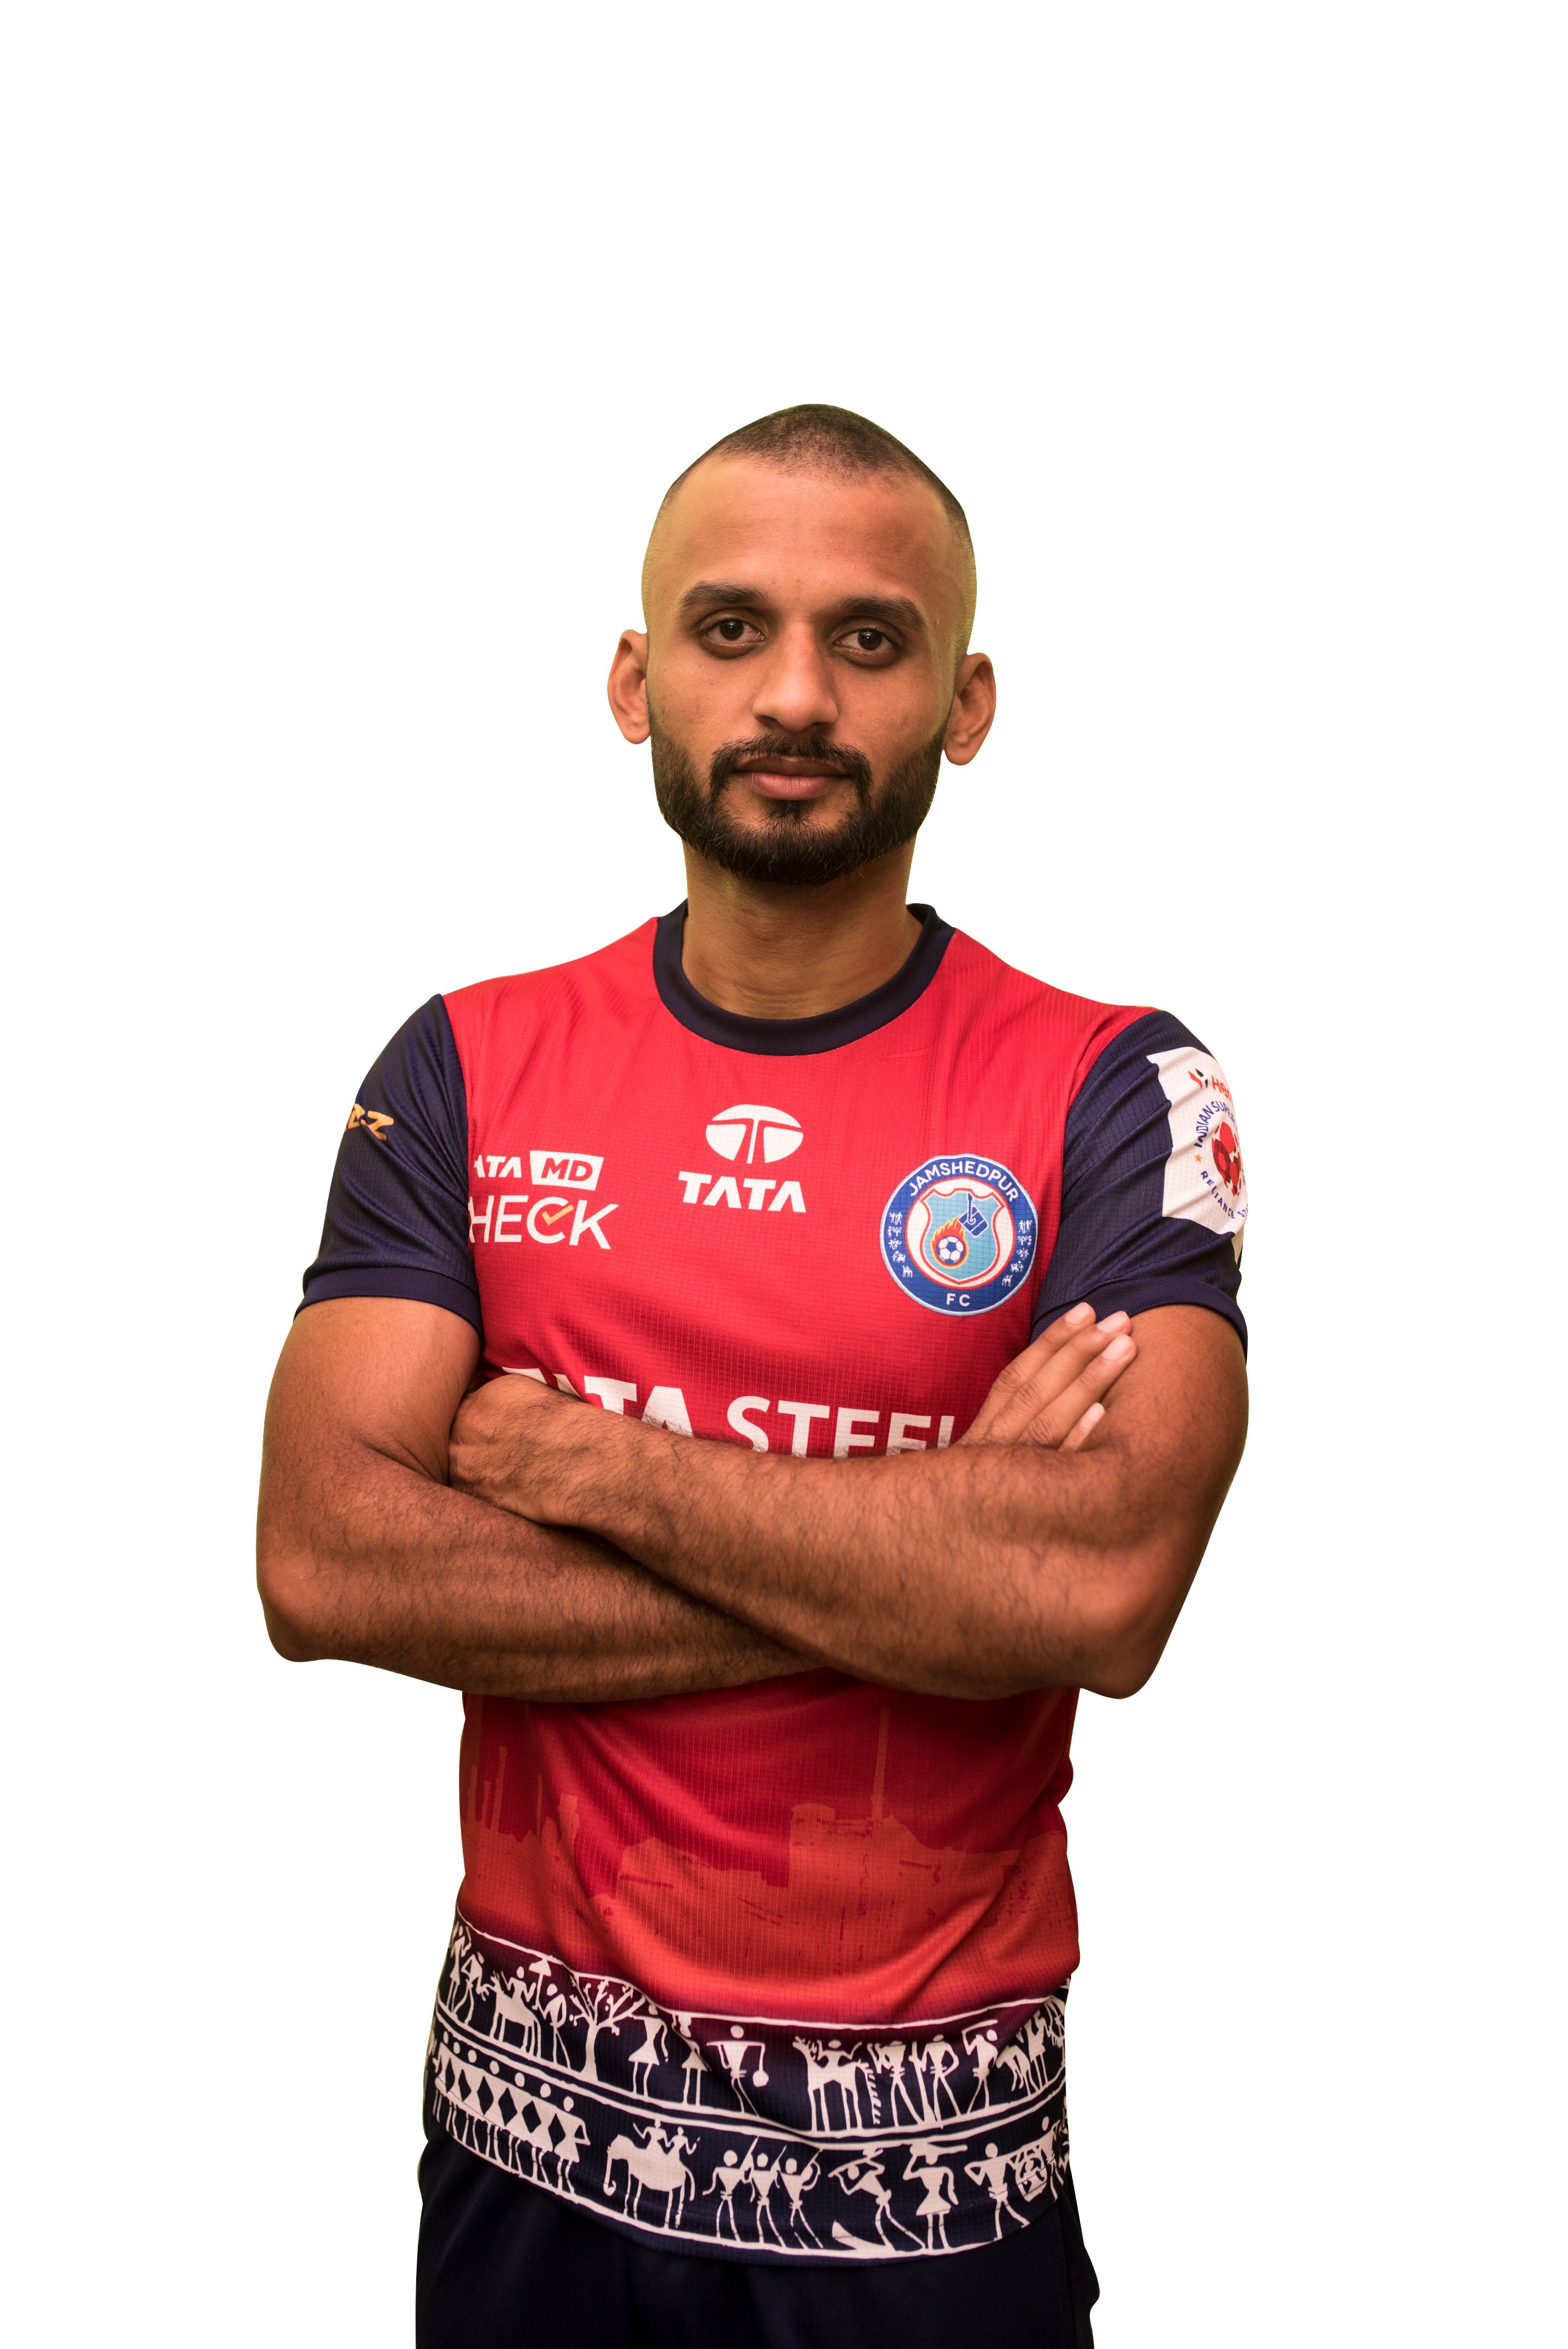 2021-22 ISL | Jamshedpur FC sign Pronay Halder on loan from ATK-Mohun Bagan